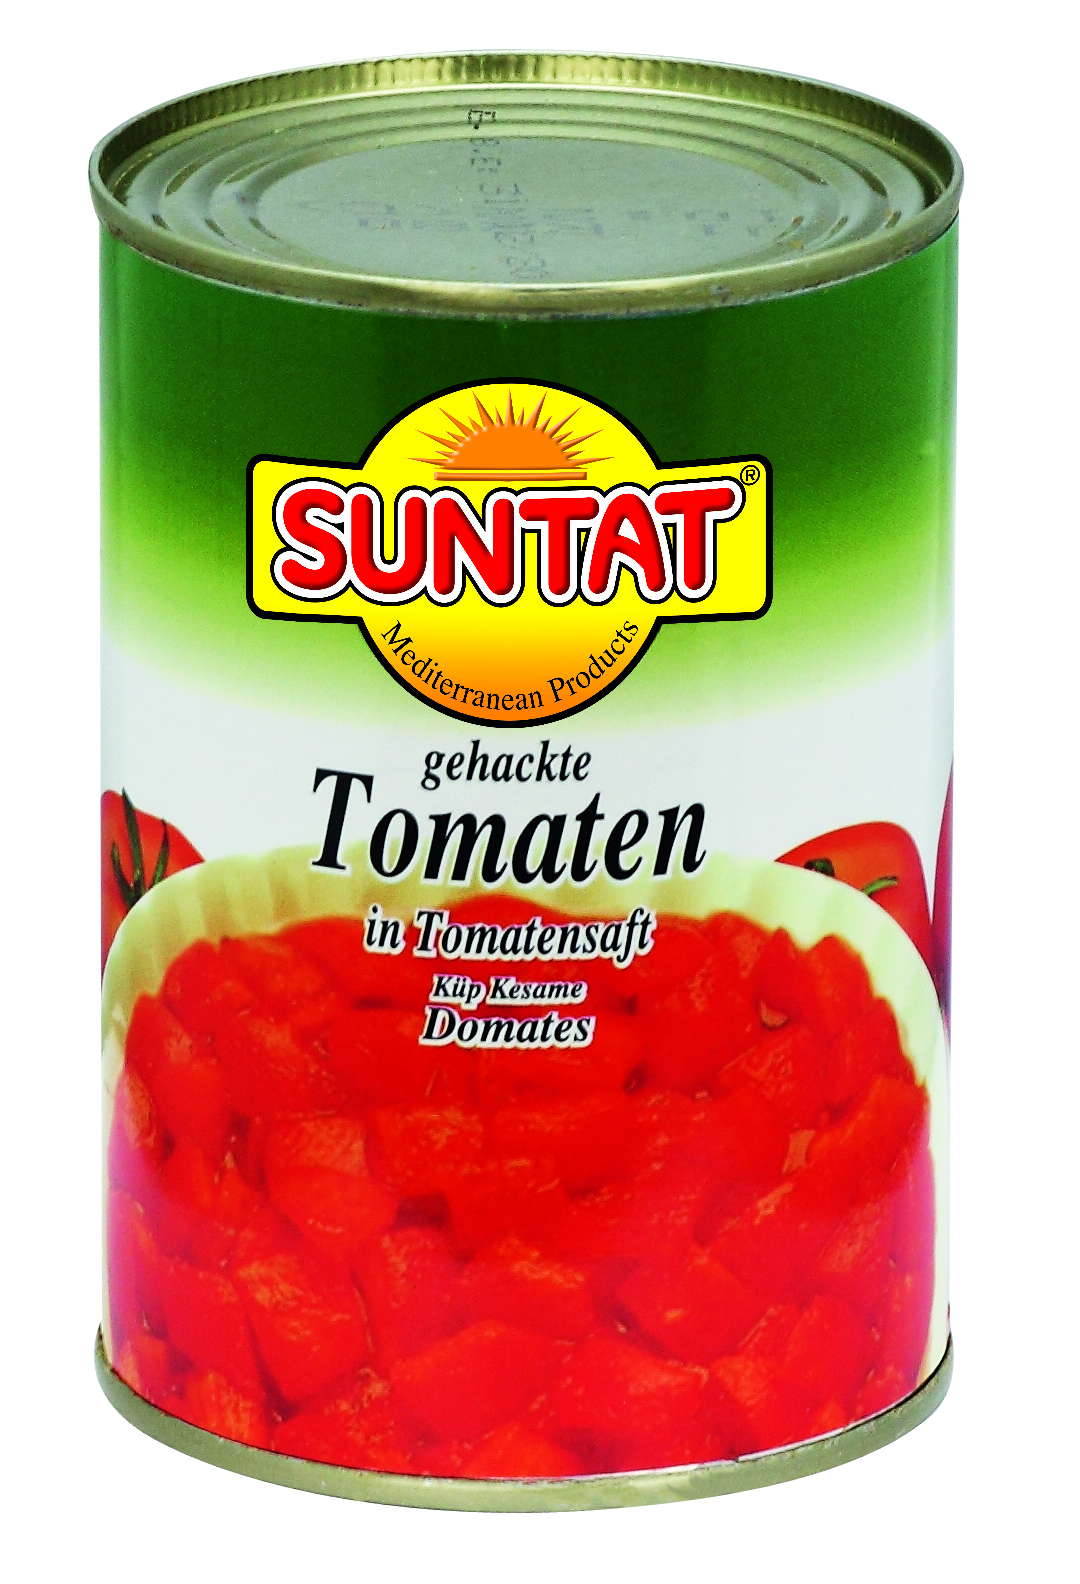 Suntat gehackte Tomaten Dose 800gr